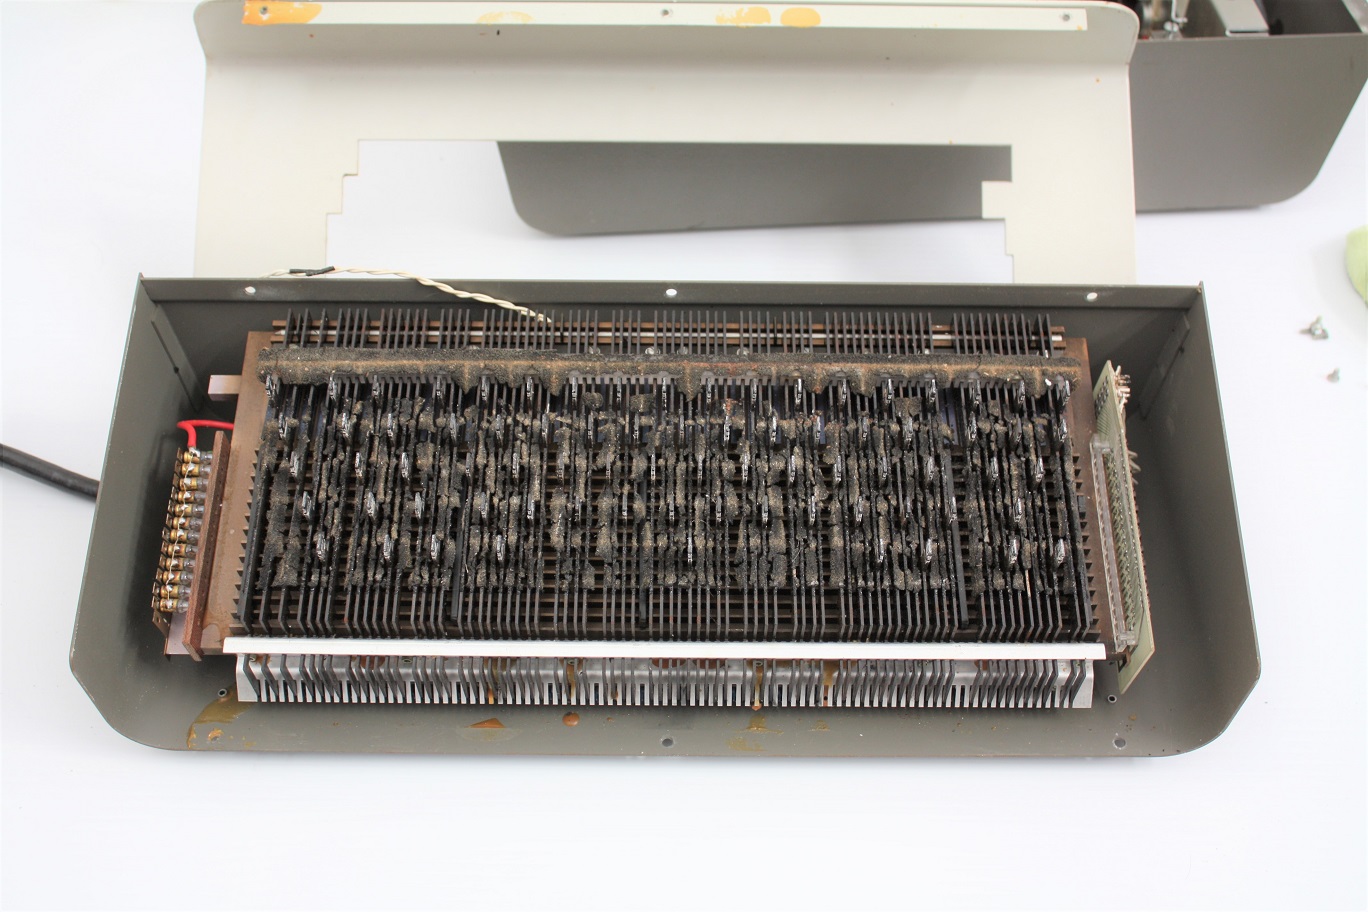 Viatron System 21 - keyboard mechanism as received